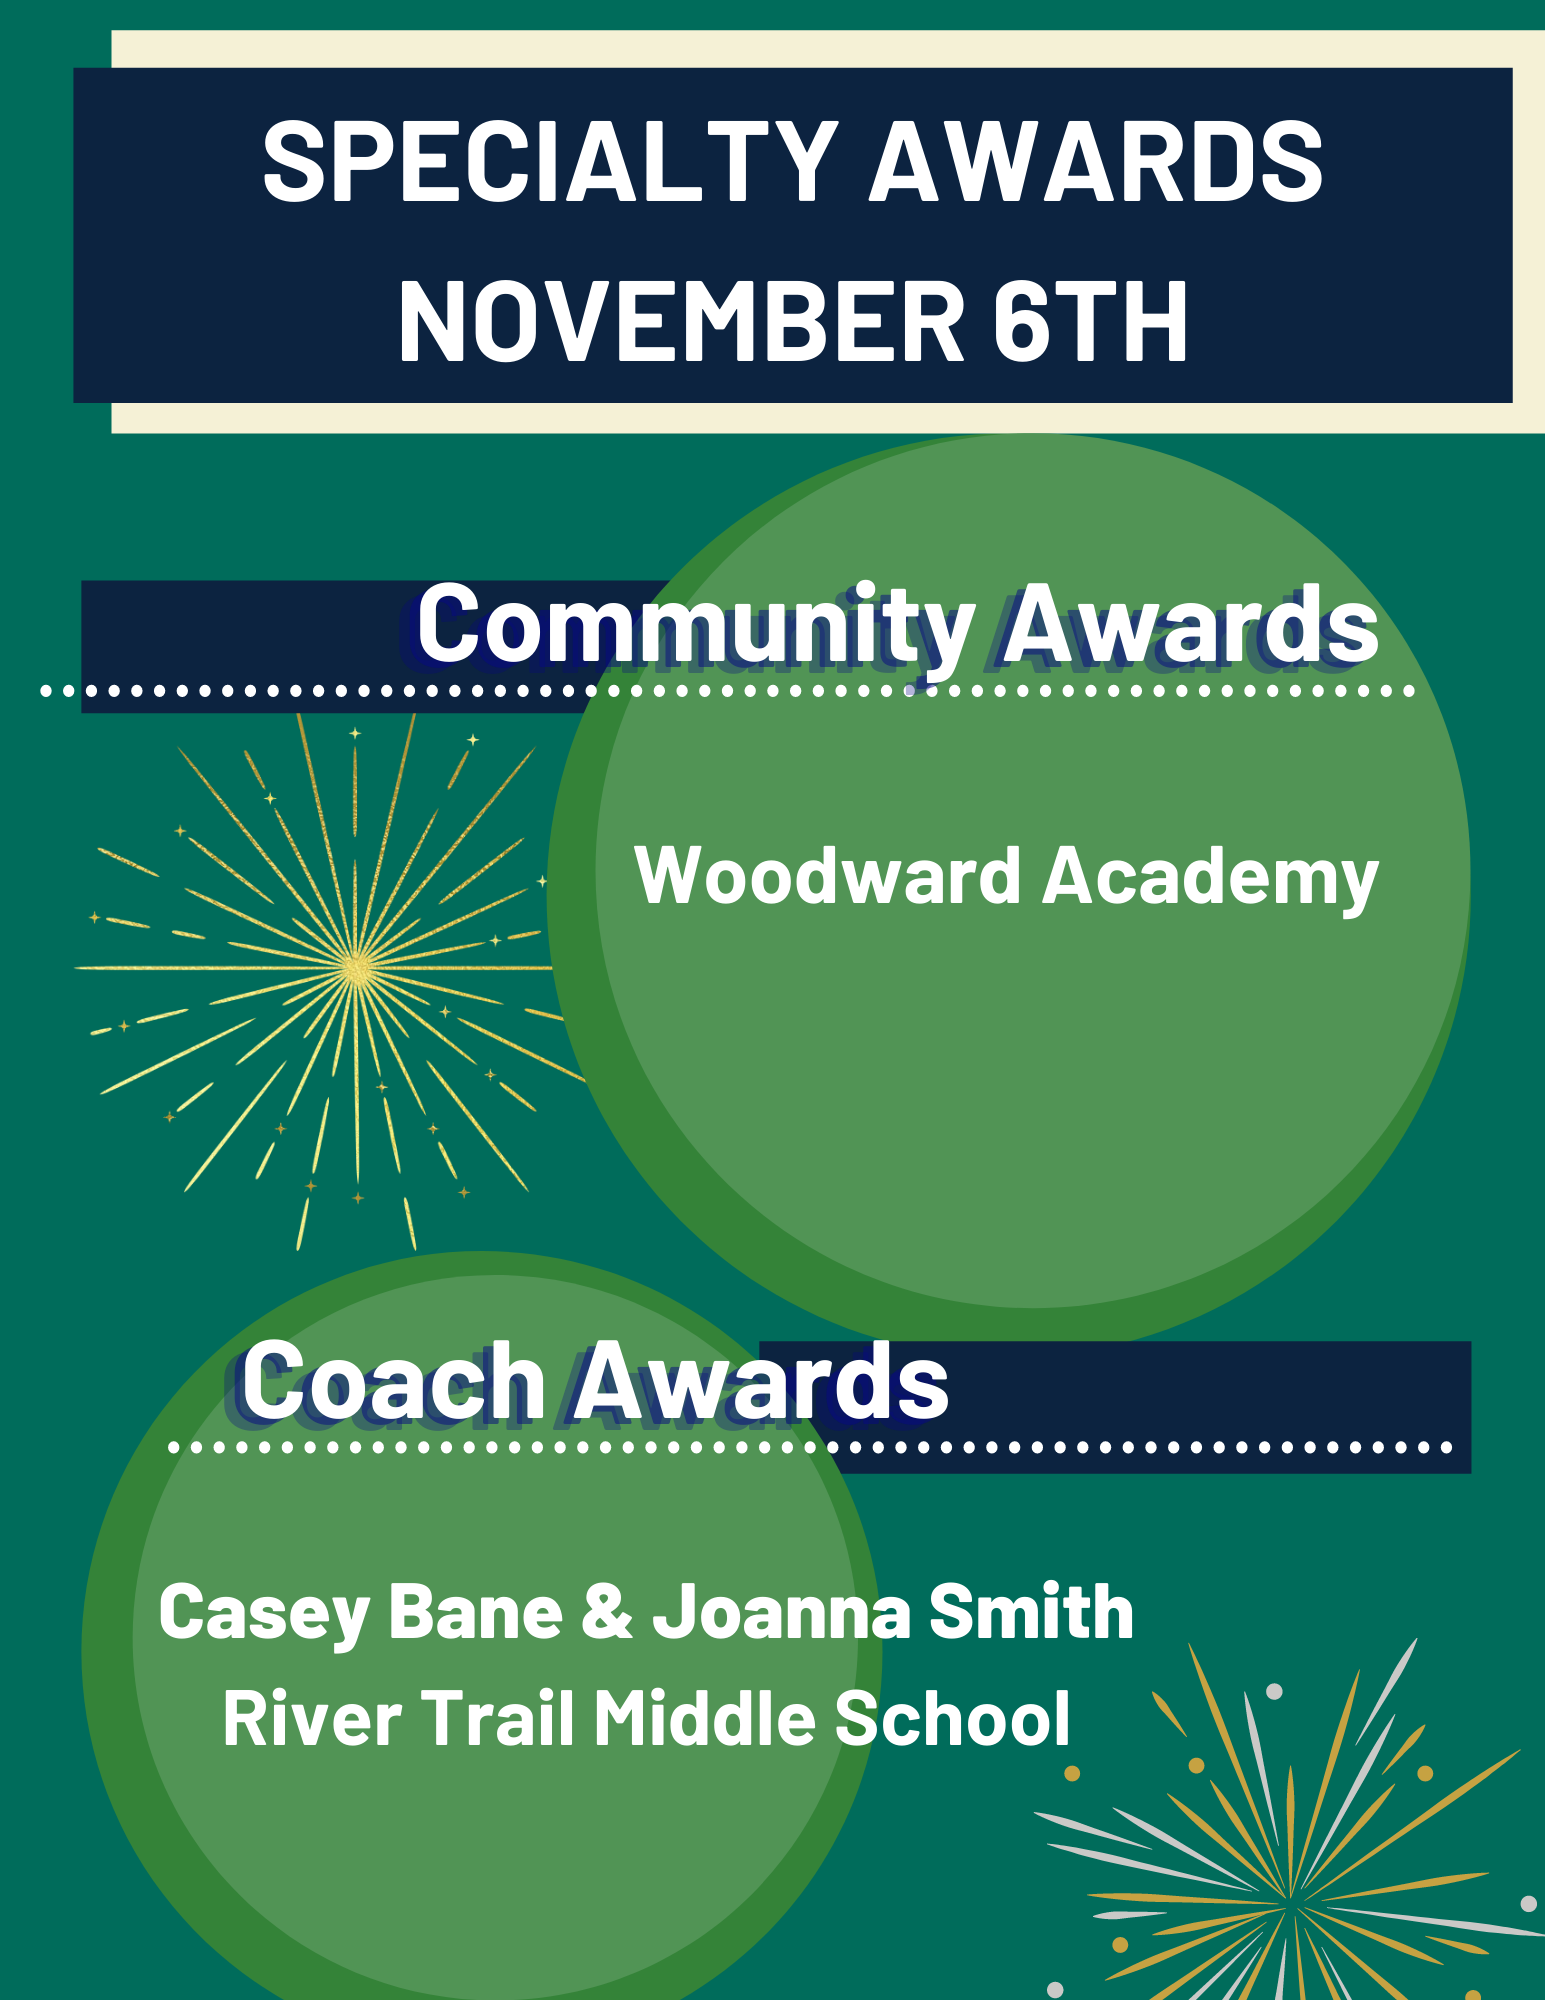 November Specialty Awards (8.5 x 11 in).png